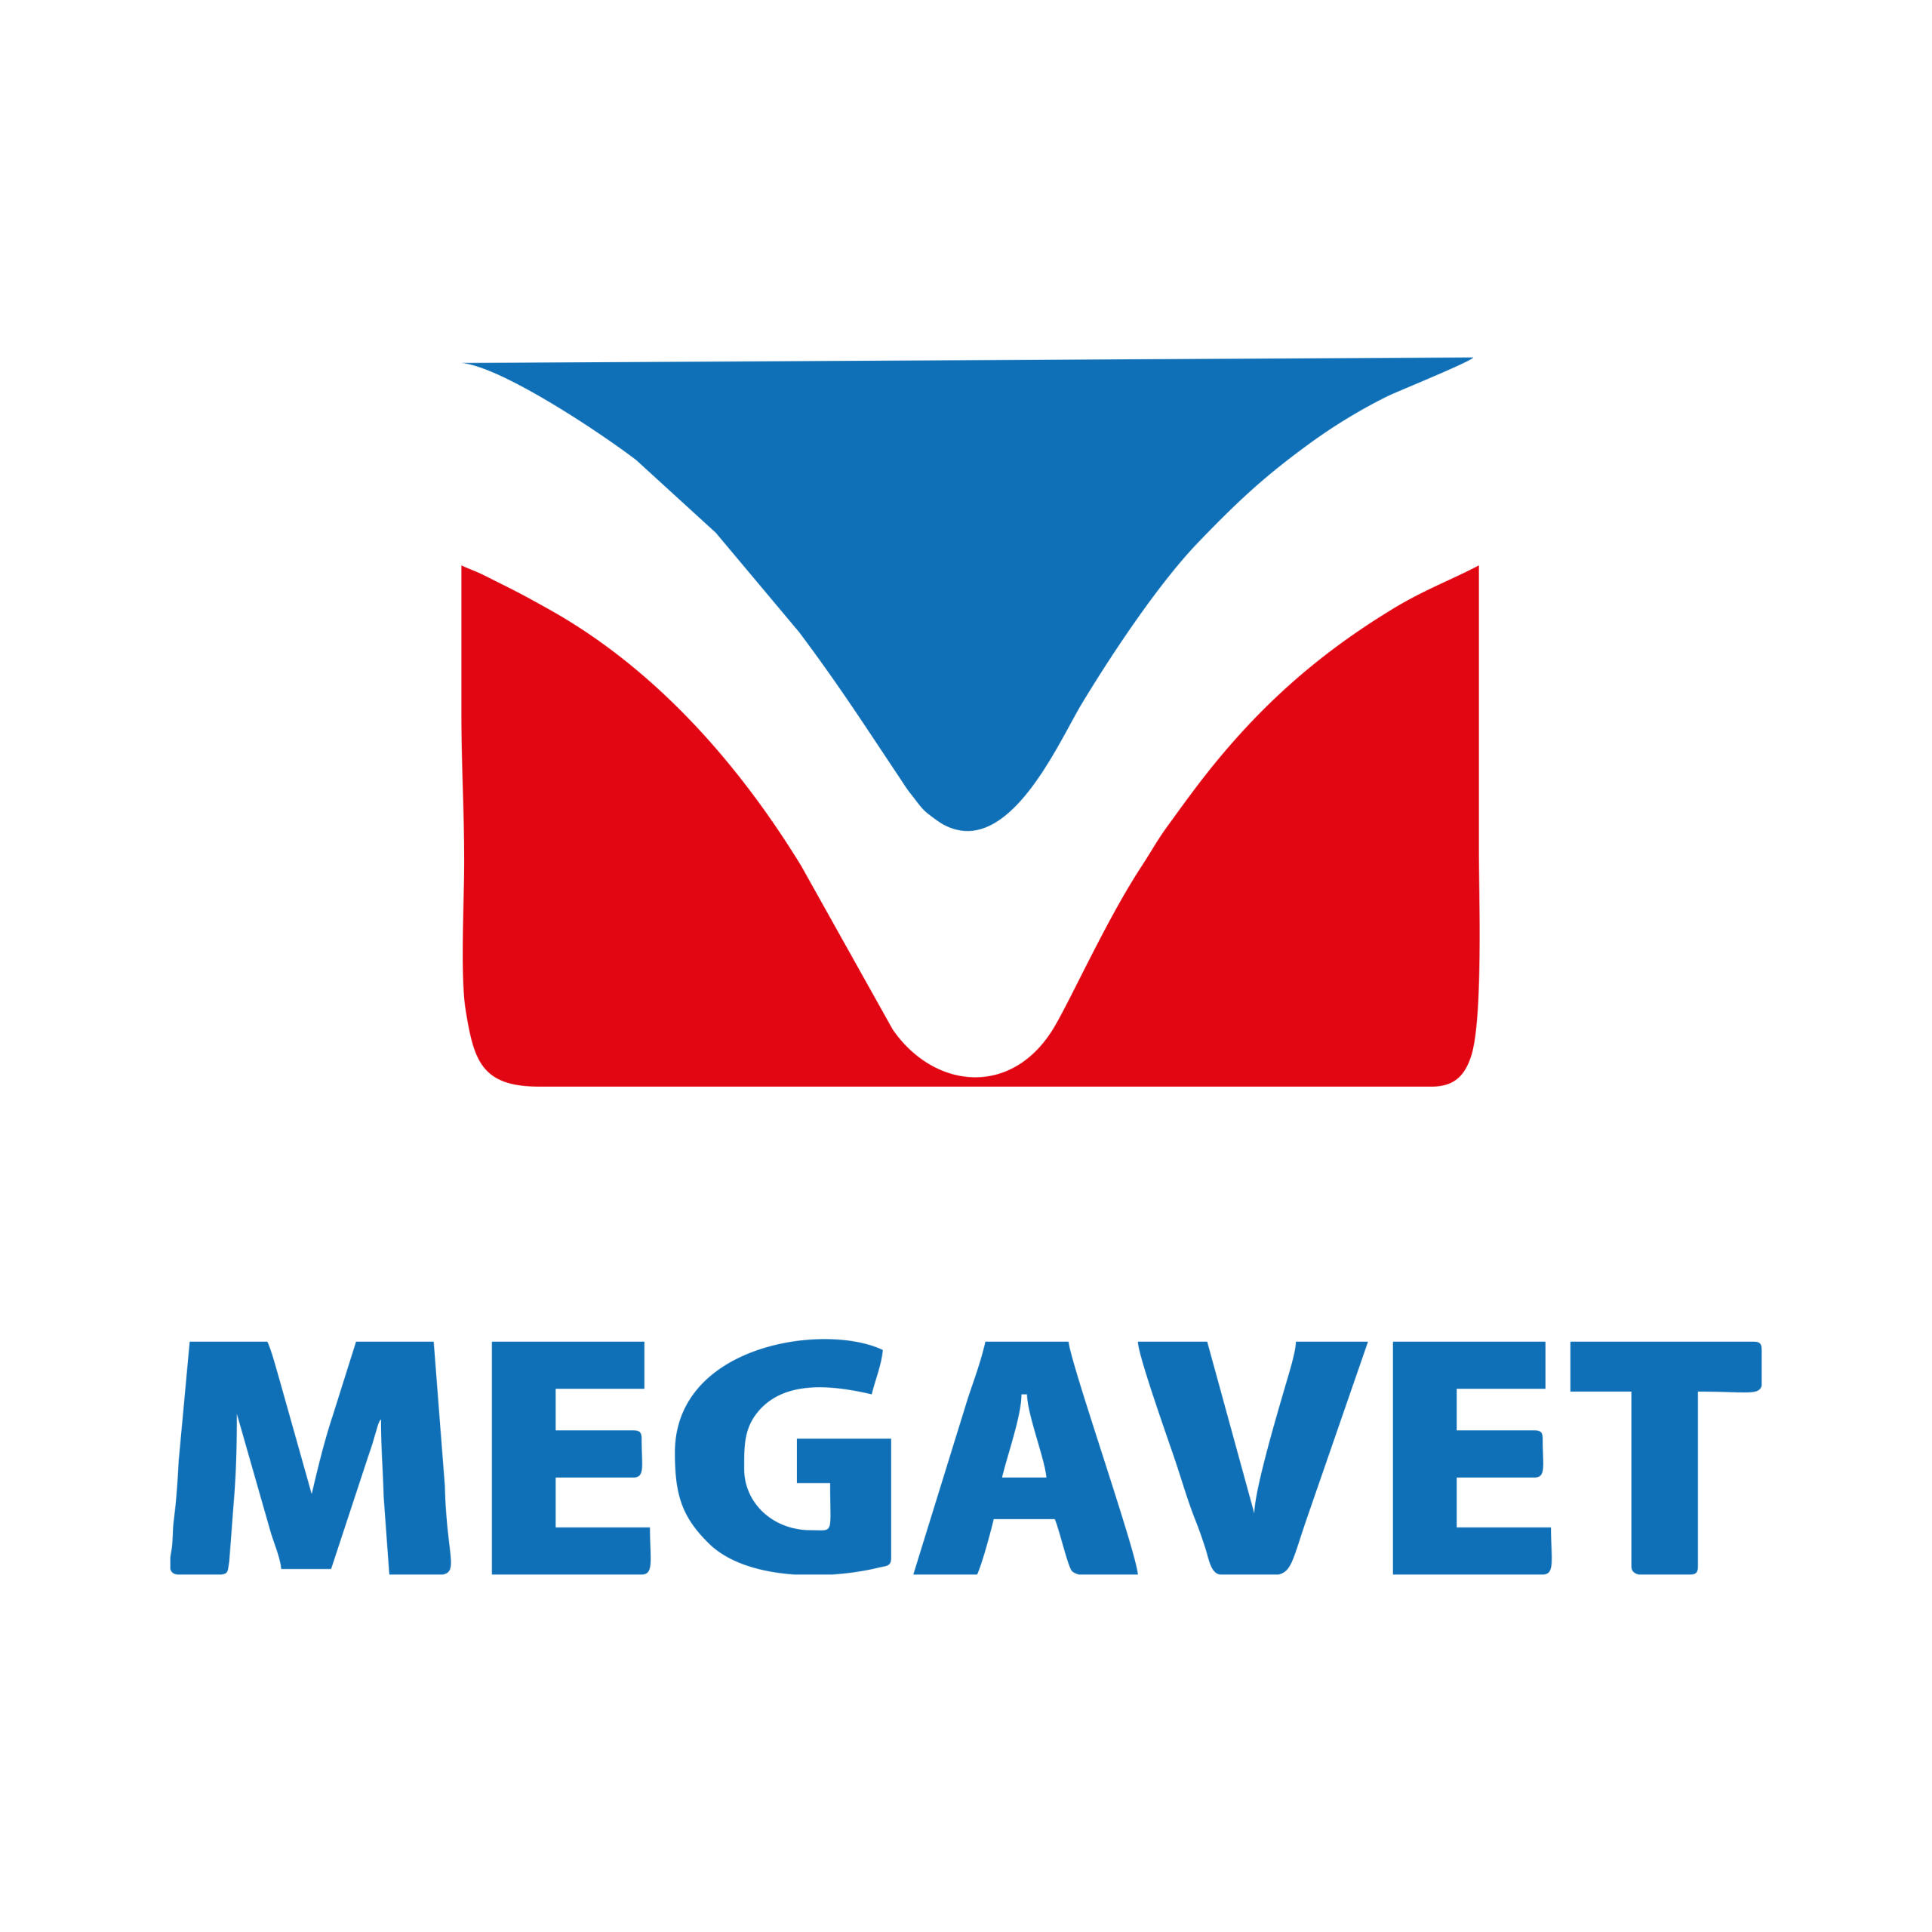 (c) Megavet.com.co